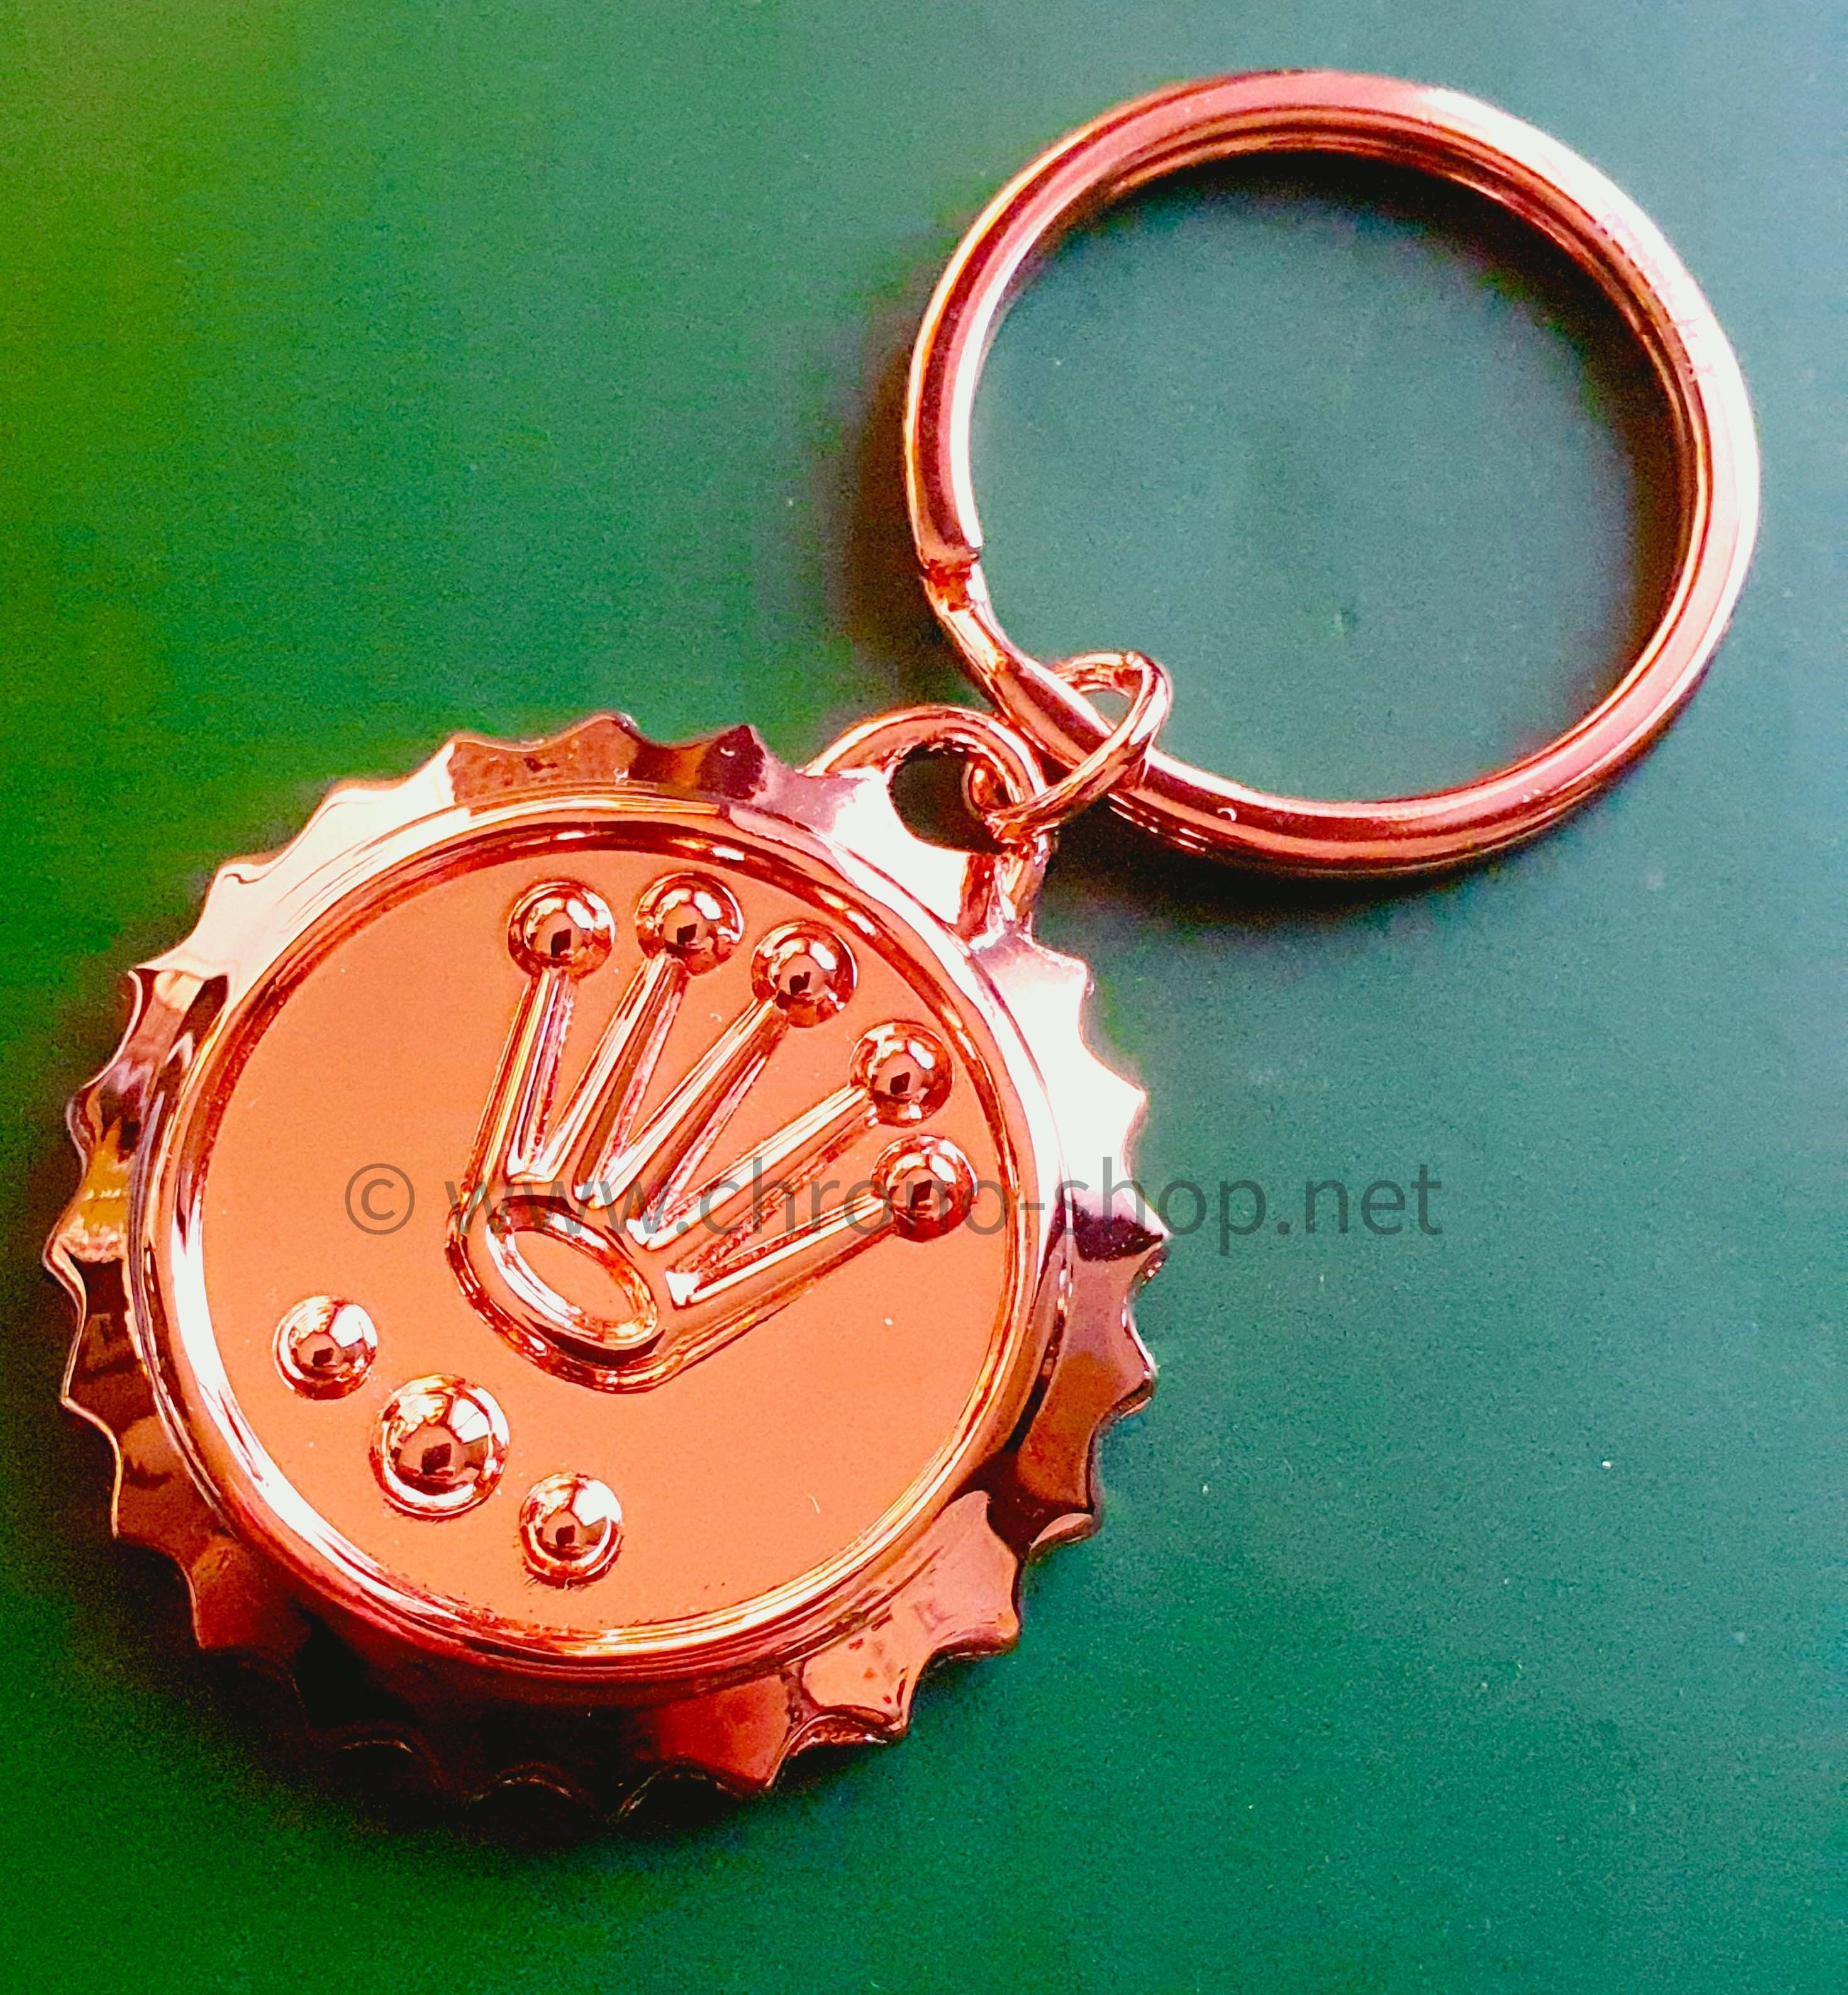 Aclix Vintage Motorbike Pocket Watch Metallic Keychain| Car, Bike, Home Key  Chain - Birthday, Anniversary Gift for Brother, Boyfriend, Friend - Keyring  : Amazon.in: Bags, Wallets and Luggage